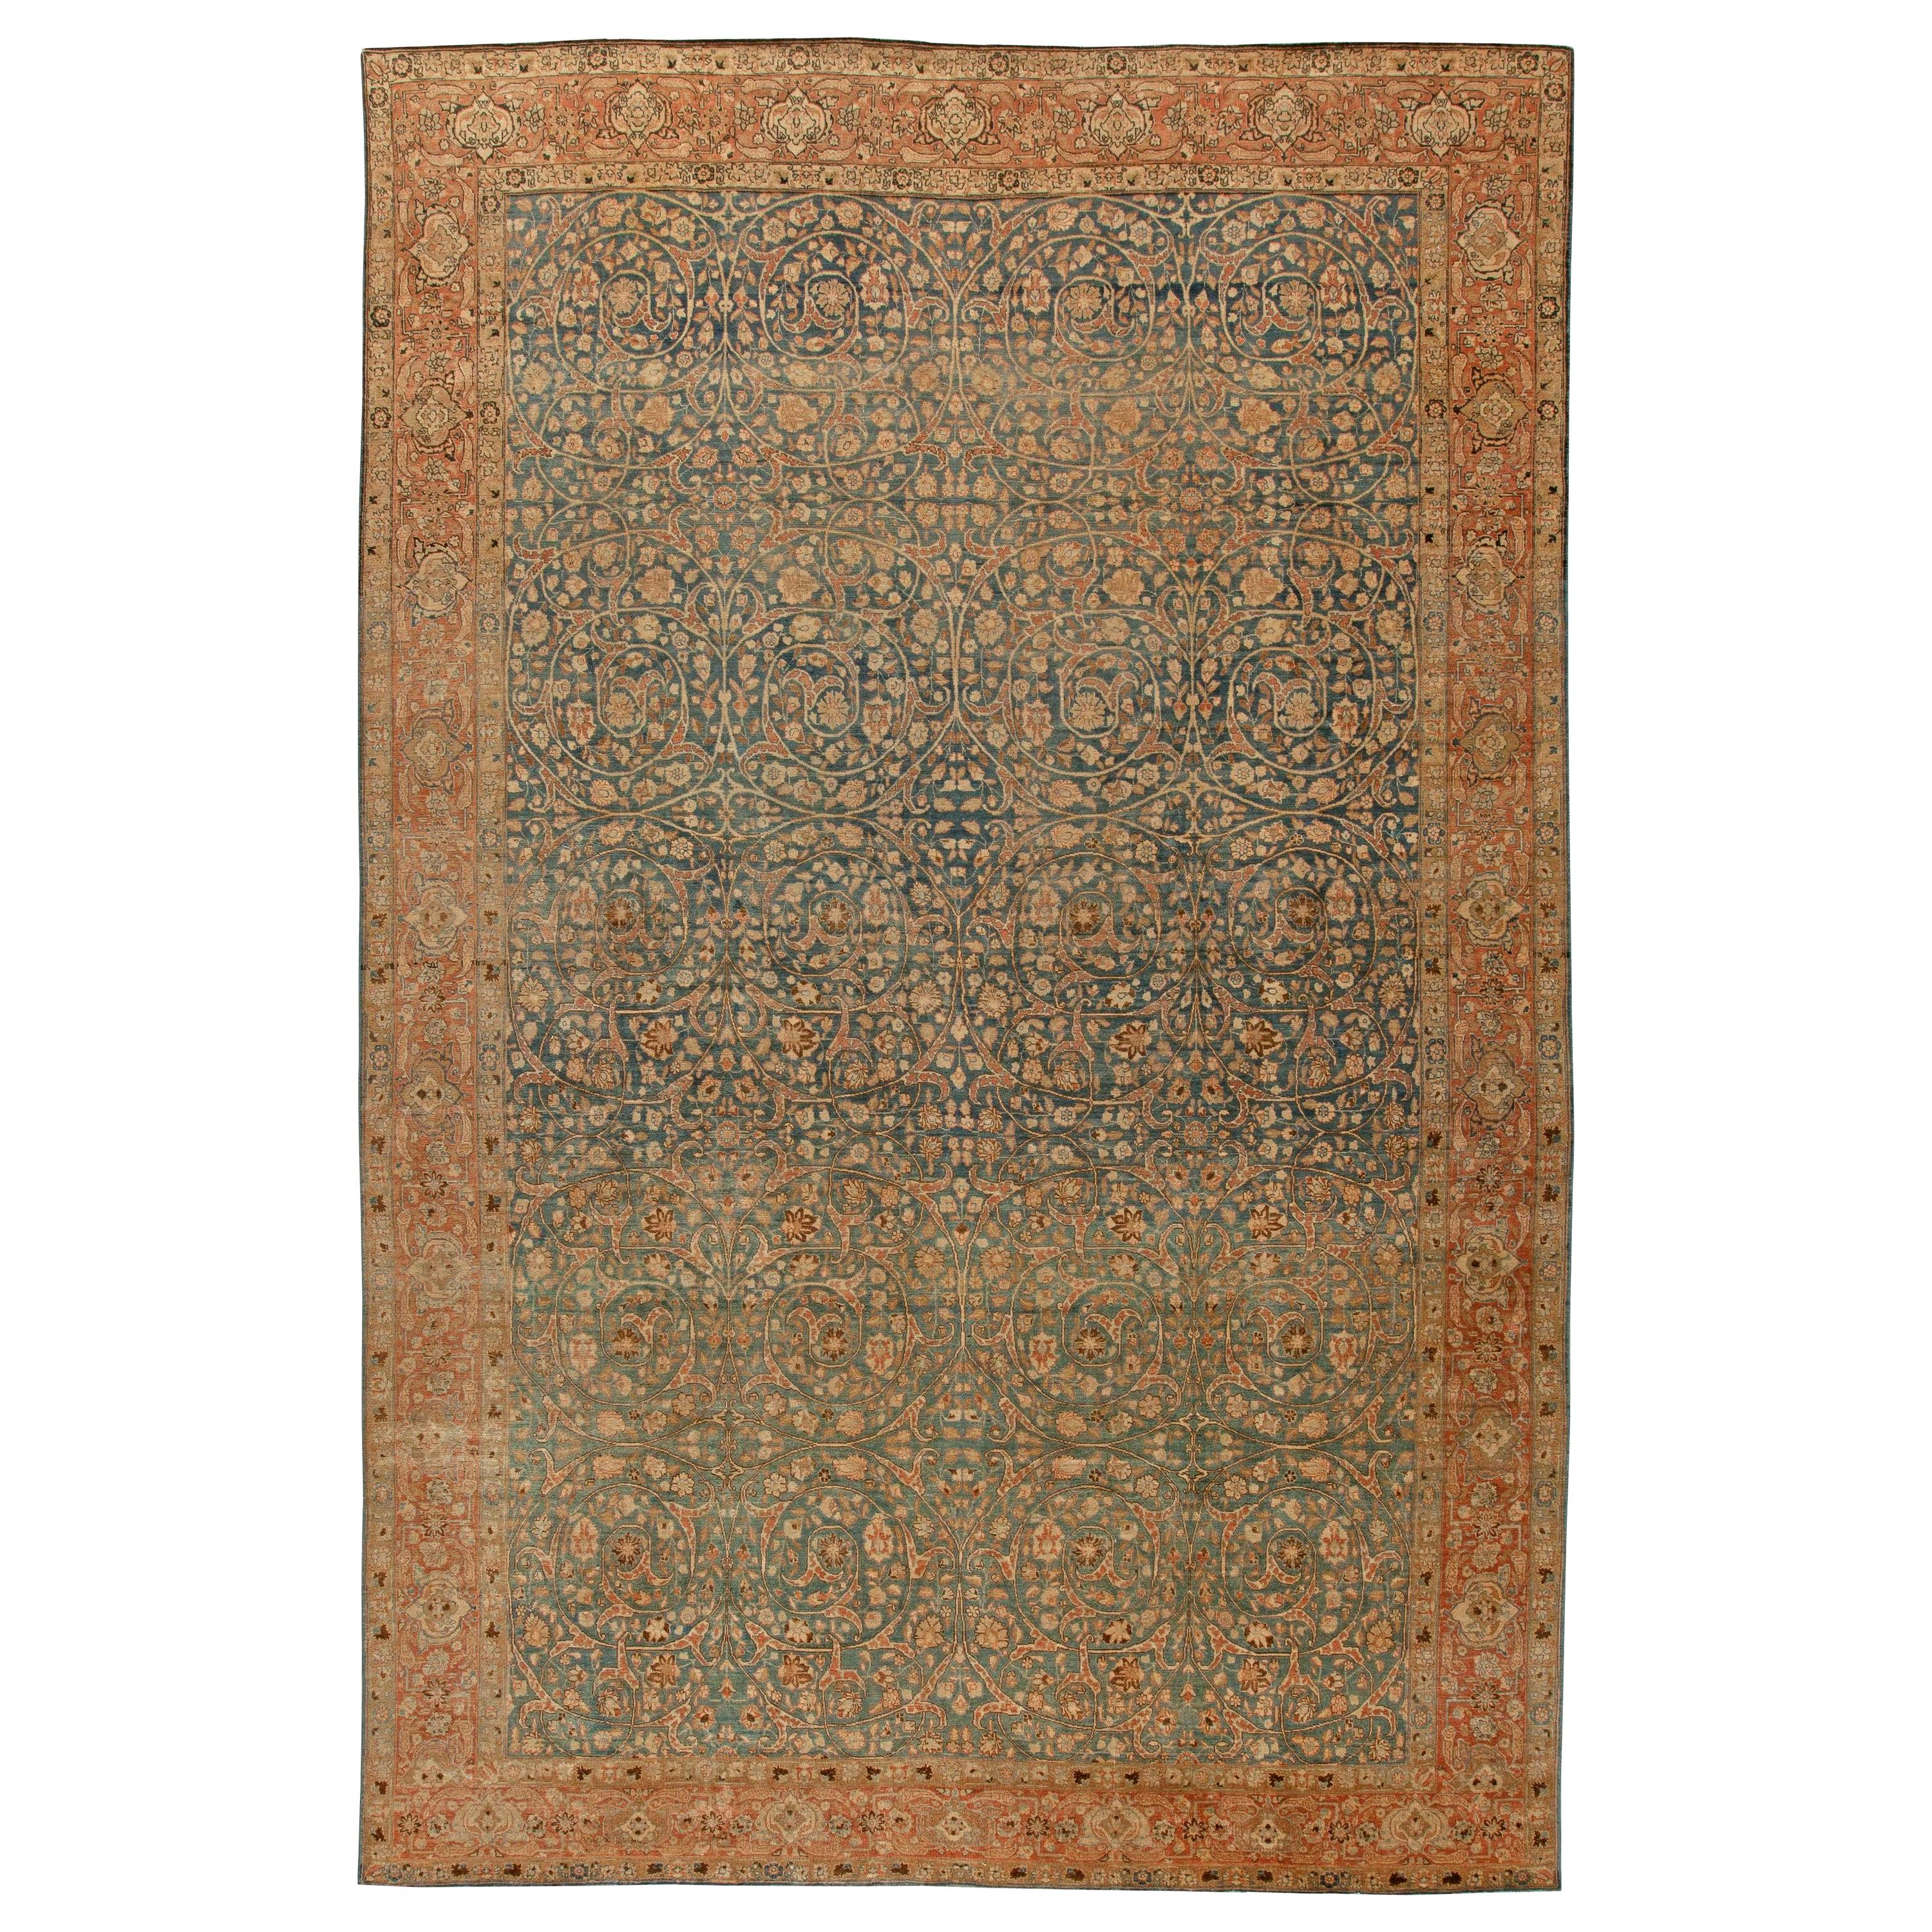 Antique Persian Tabriz Handwoven Wool Carpet